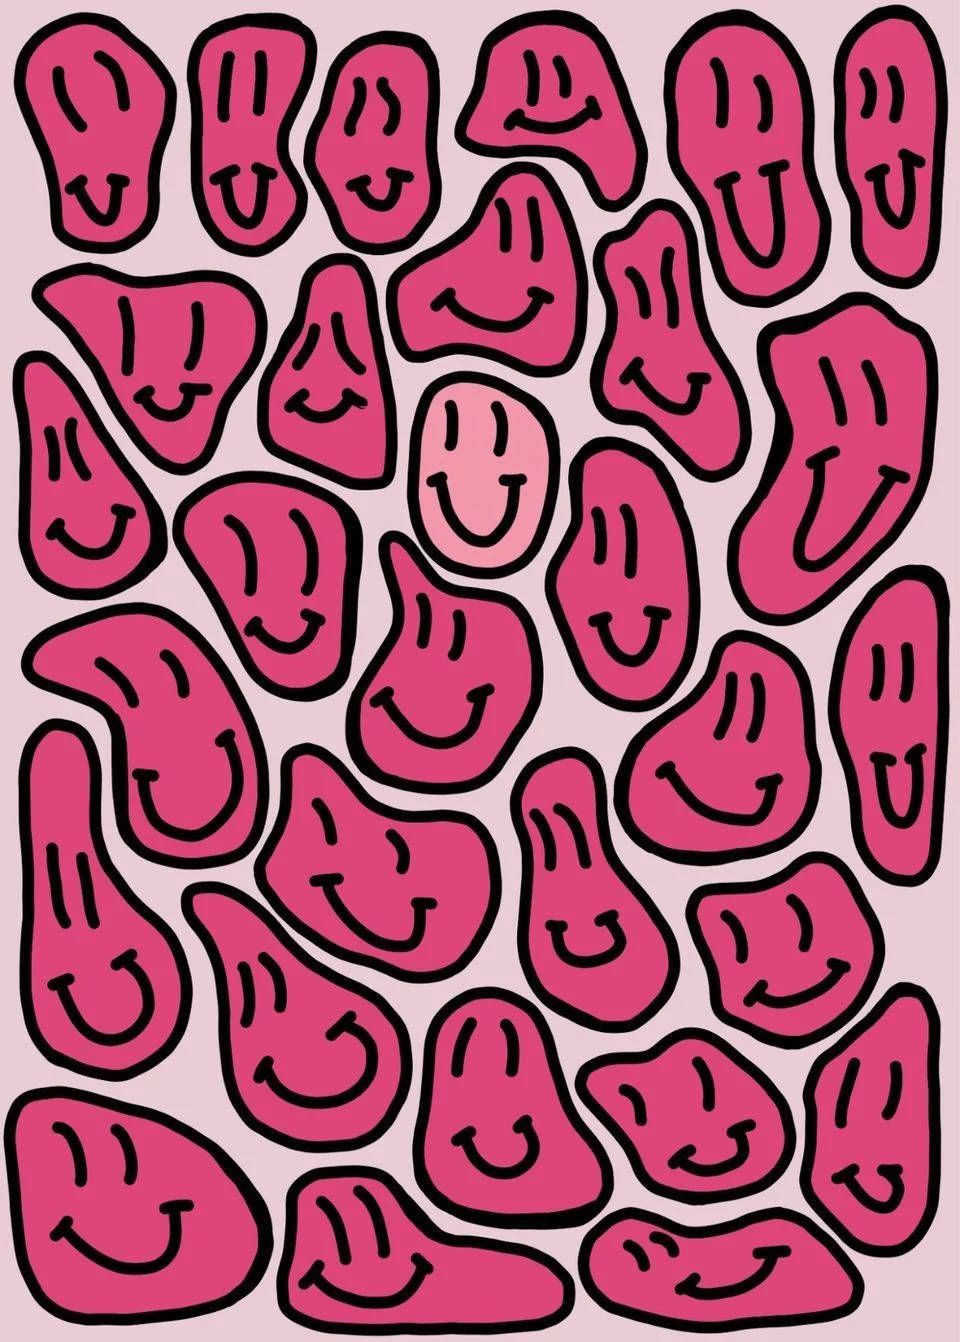 Preppy Smiley Face Pink Doodles Wallpaper